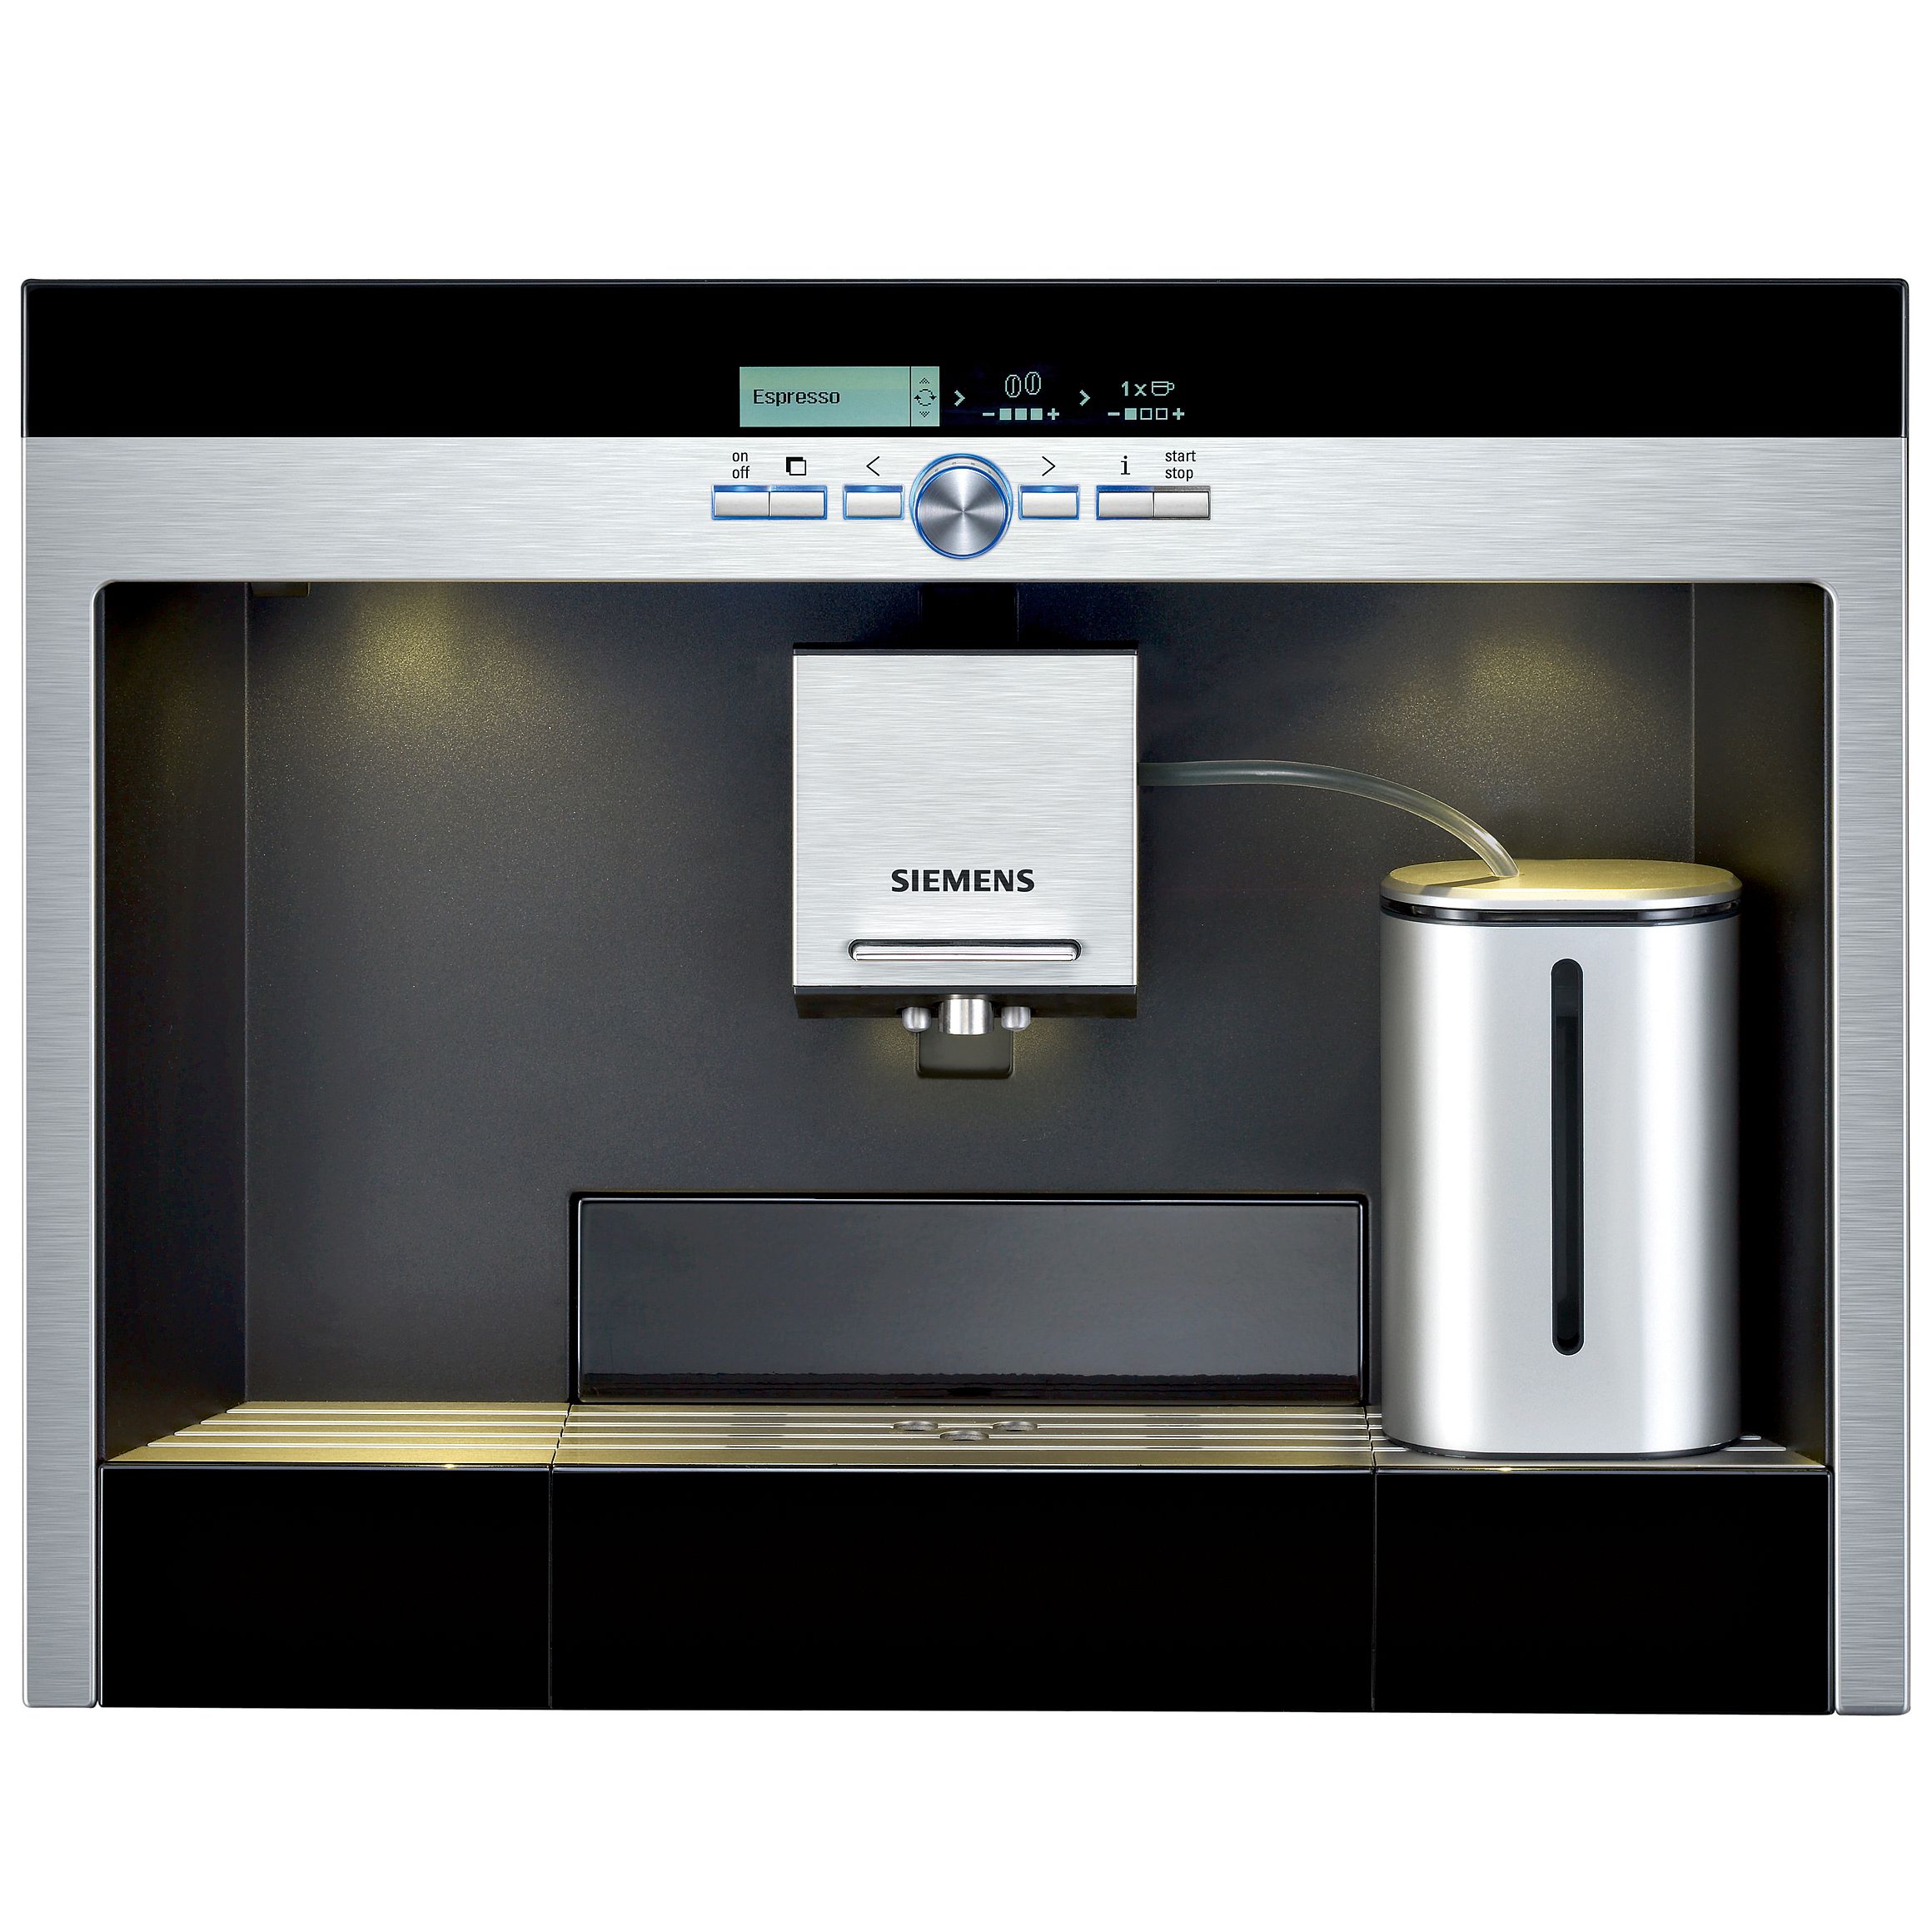 Siemens TK76K572GB Integrated Coffee Machine at JohnLewis